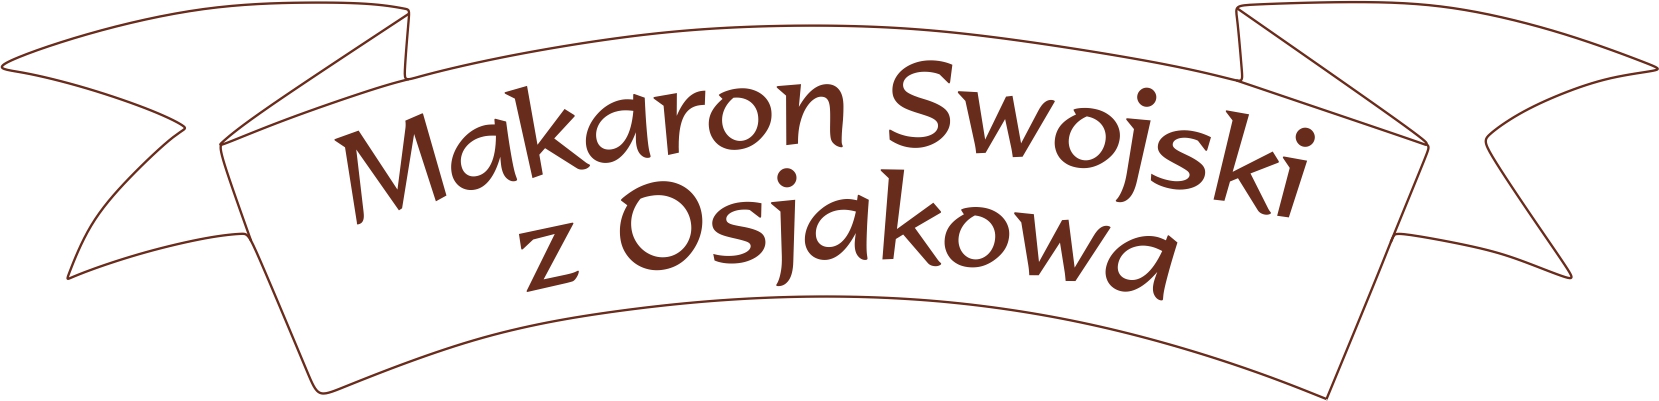 makaronswojski logo